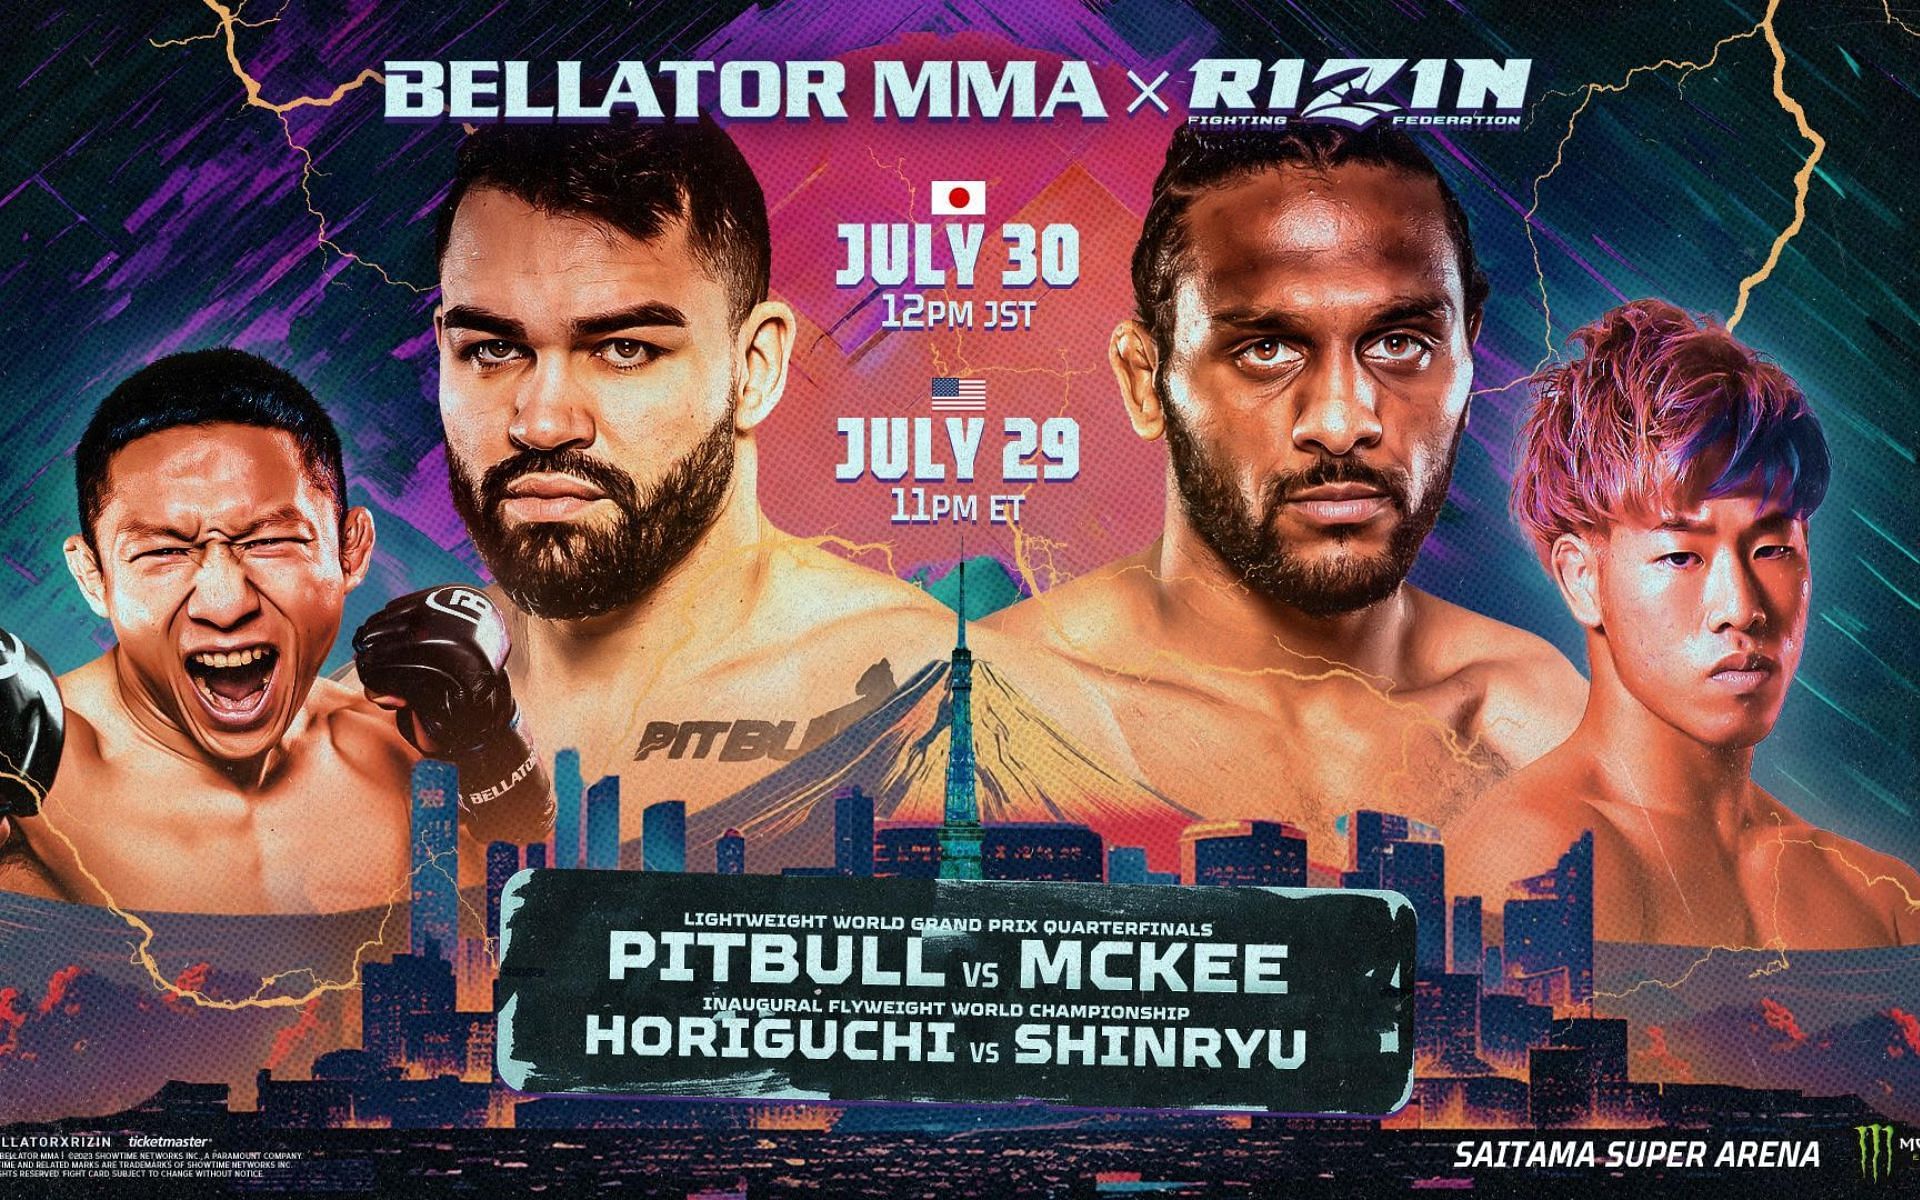 Bellator MMA x Rizin 2 poster [Photo credit: Bellator MMA]